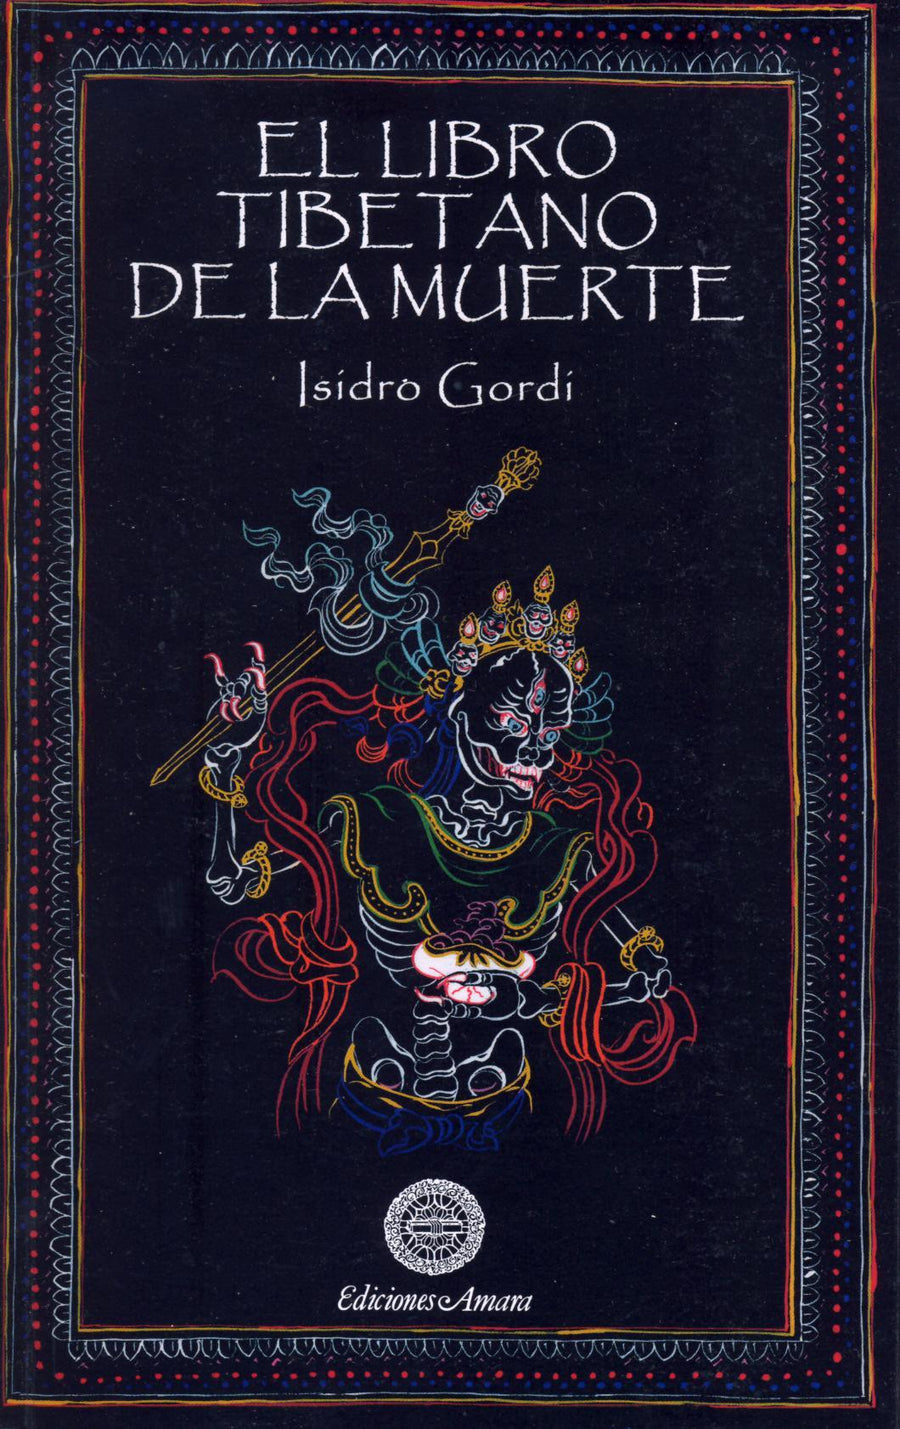 El libro tibetano de la muerte